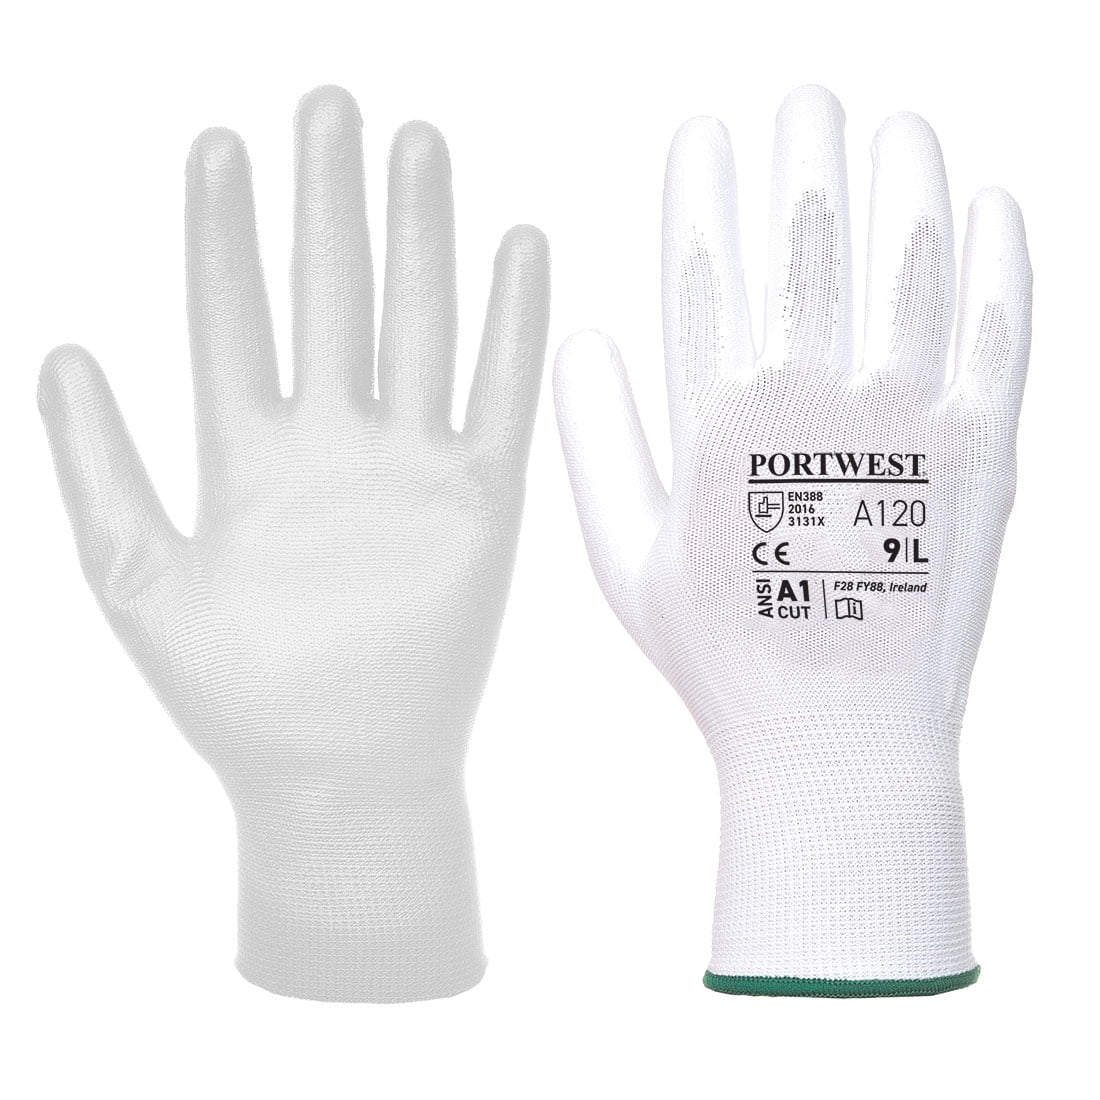 PORTWEST A620 grey cut resistant 3 PU palm glove size XS-XXL vending packaged